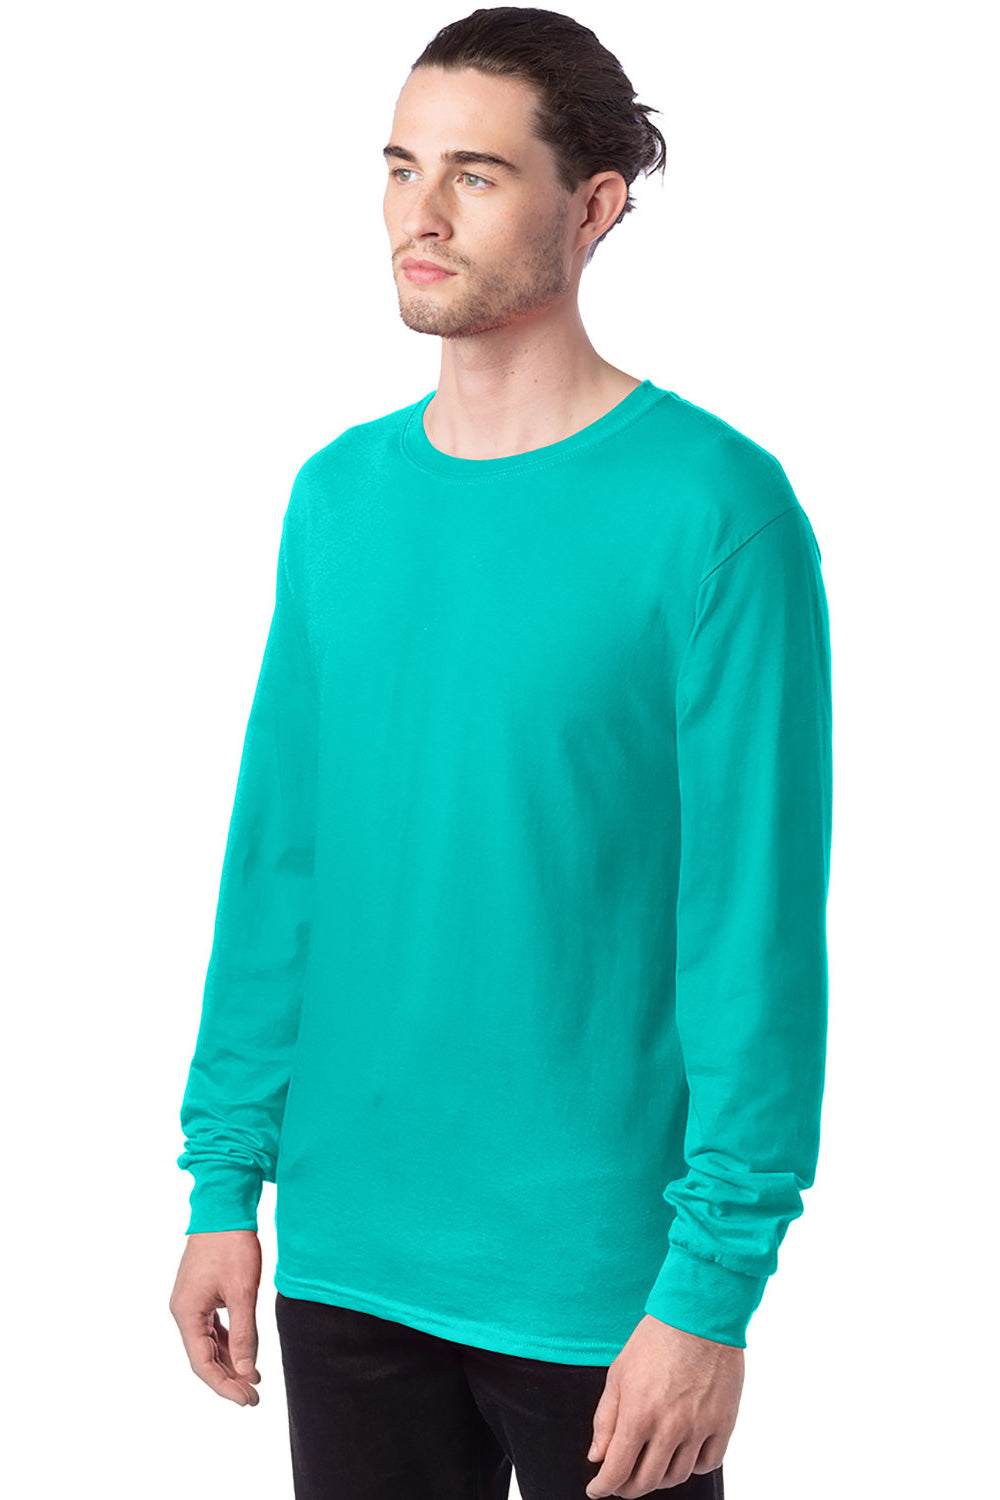 Hanes 5286 Mens ComfortSoft Long Sleeve Crewneck T-Shirt Athletic Teal Green 3Q